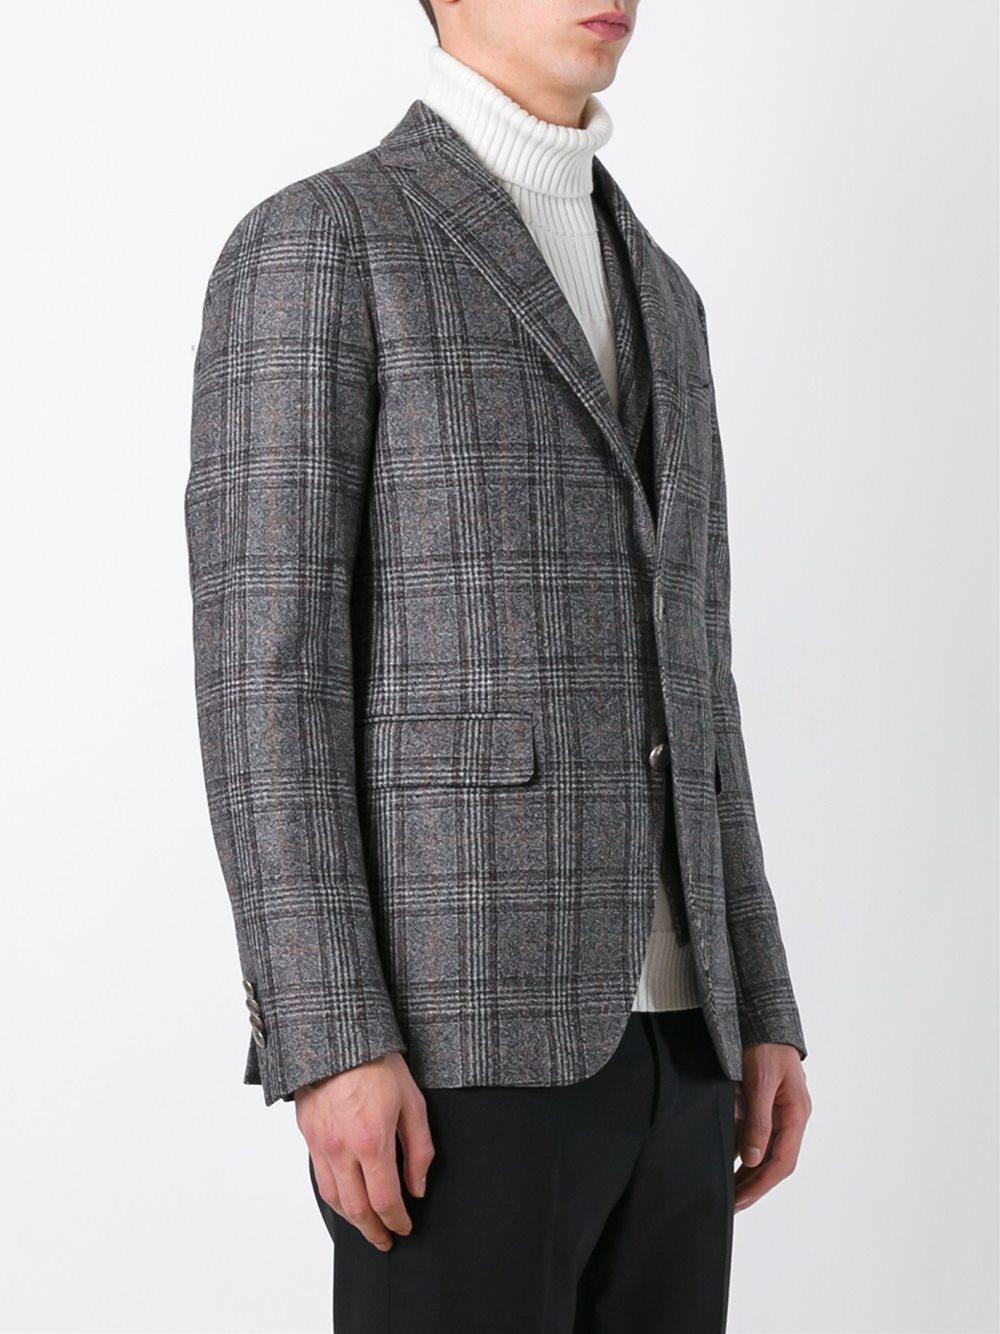 Tagliatore Wool Plaid Single Breasted Blazer in Grey (Gray) for Men - Lyst